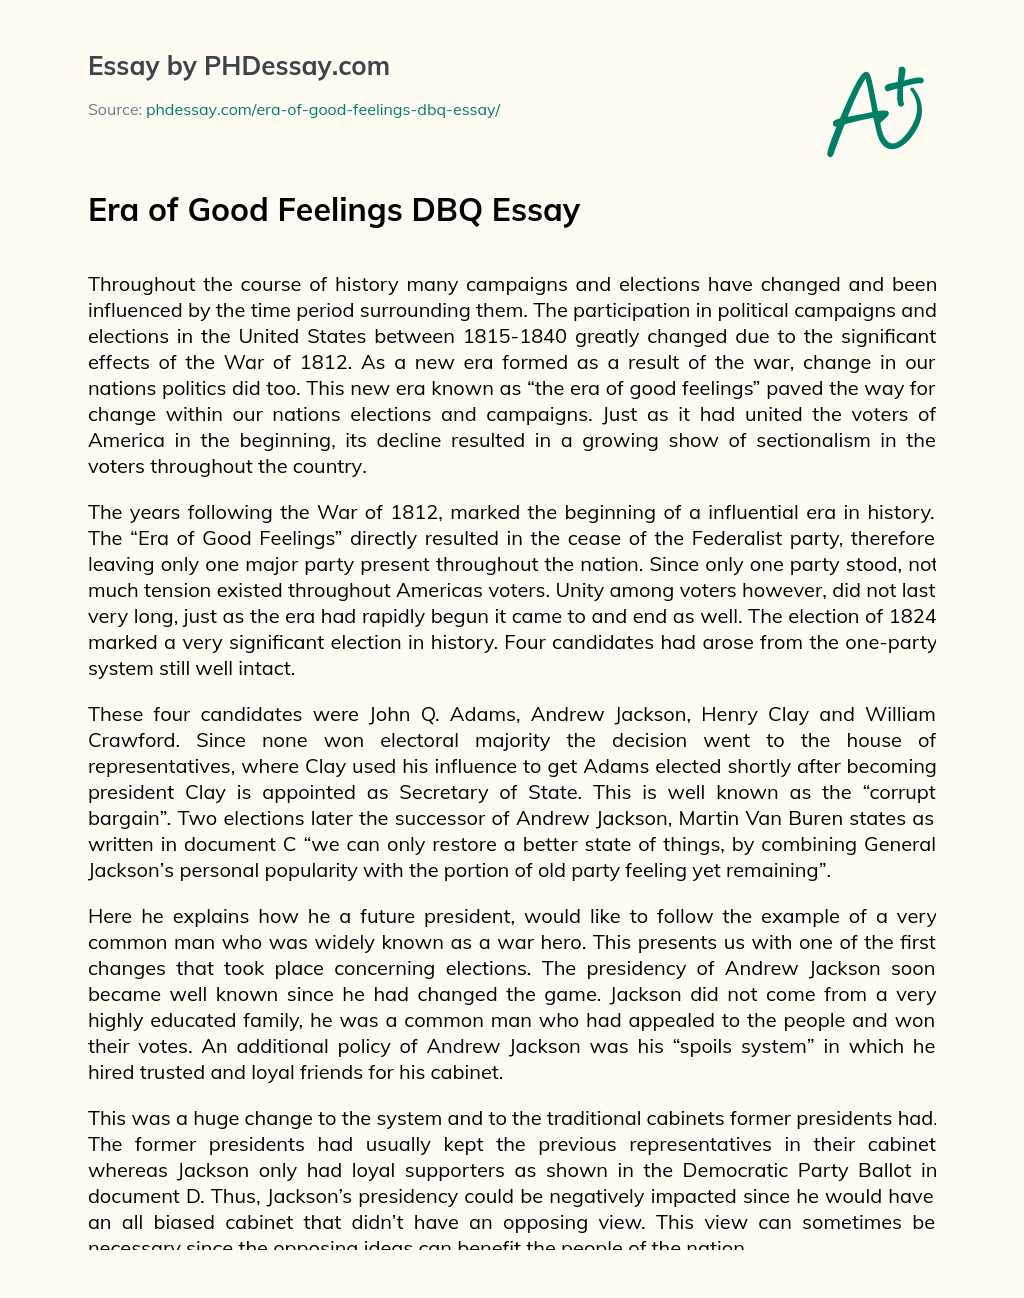 era of good feelings dbq essay